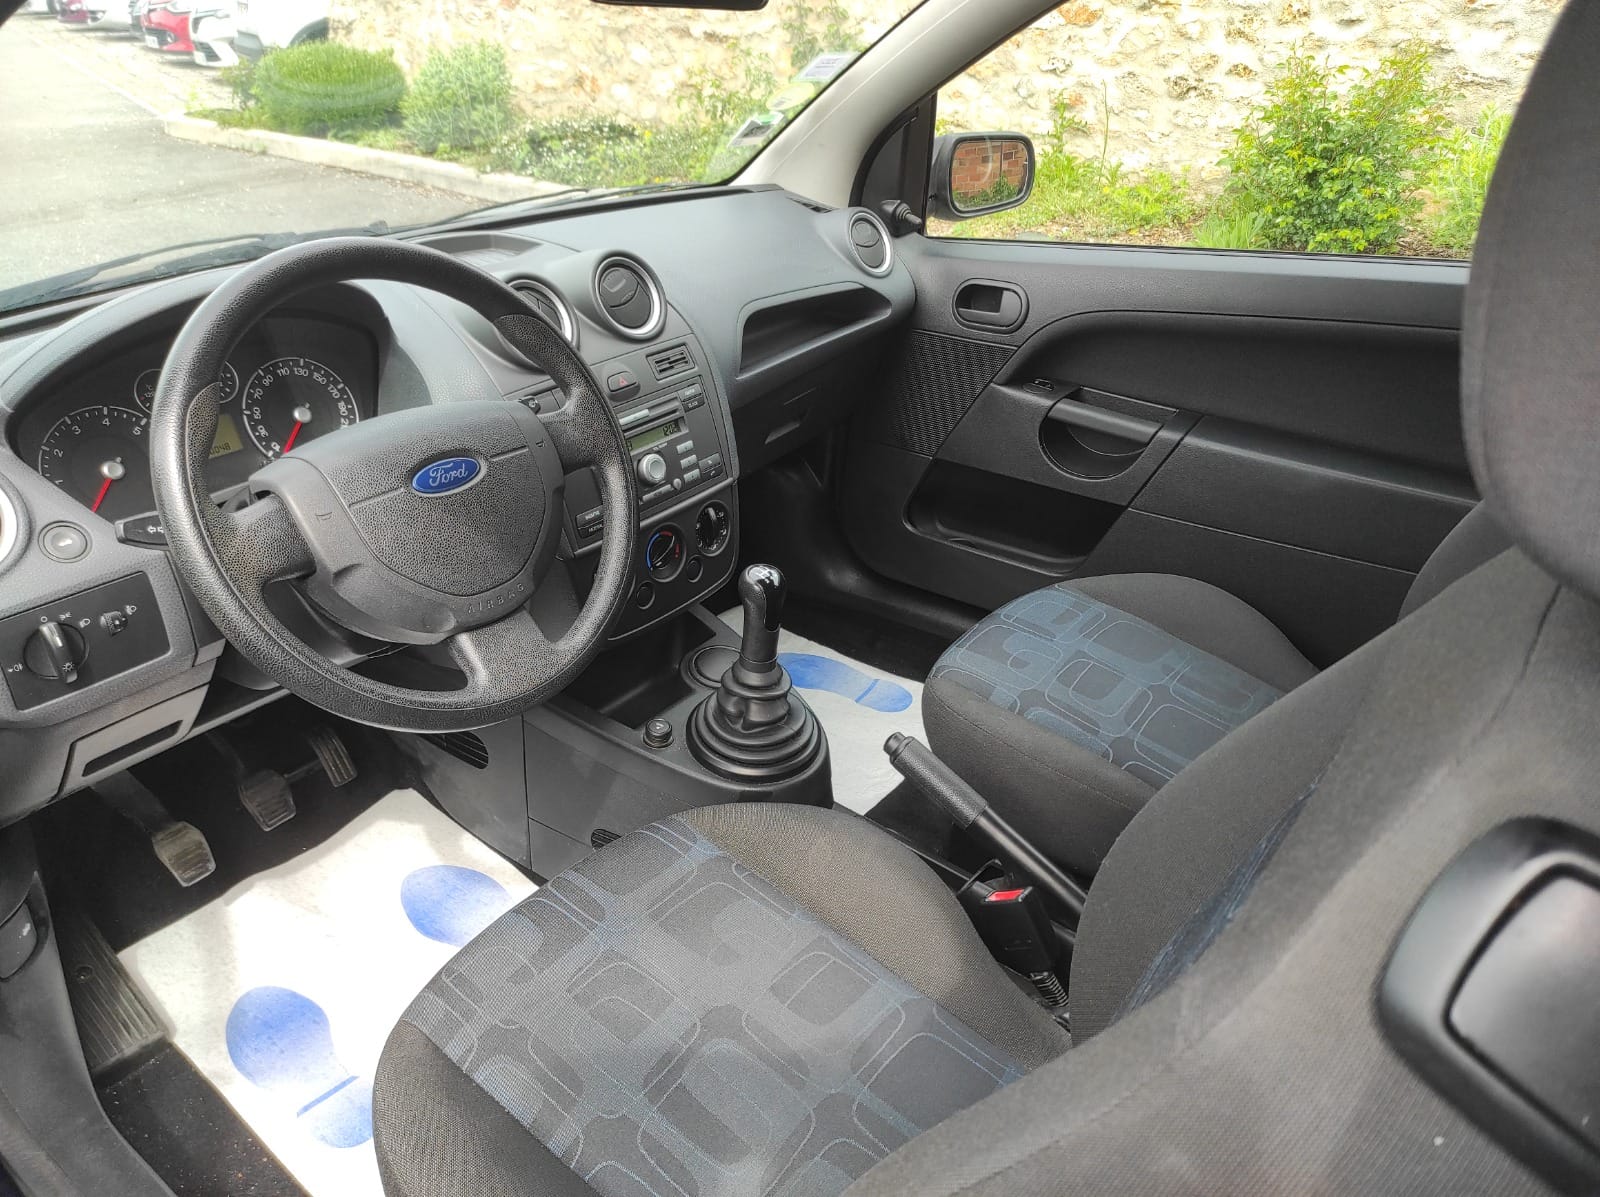 Ford Fiesta Fun 2007 1.25 75ch - Automatix Motors - Voiture Occasion - Achat Voiture - Vente Voiture - Reprise Voiture